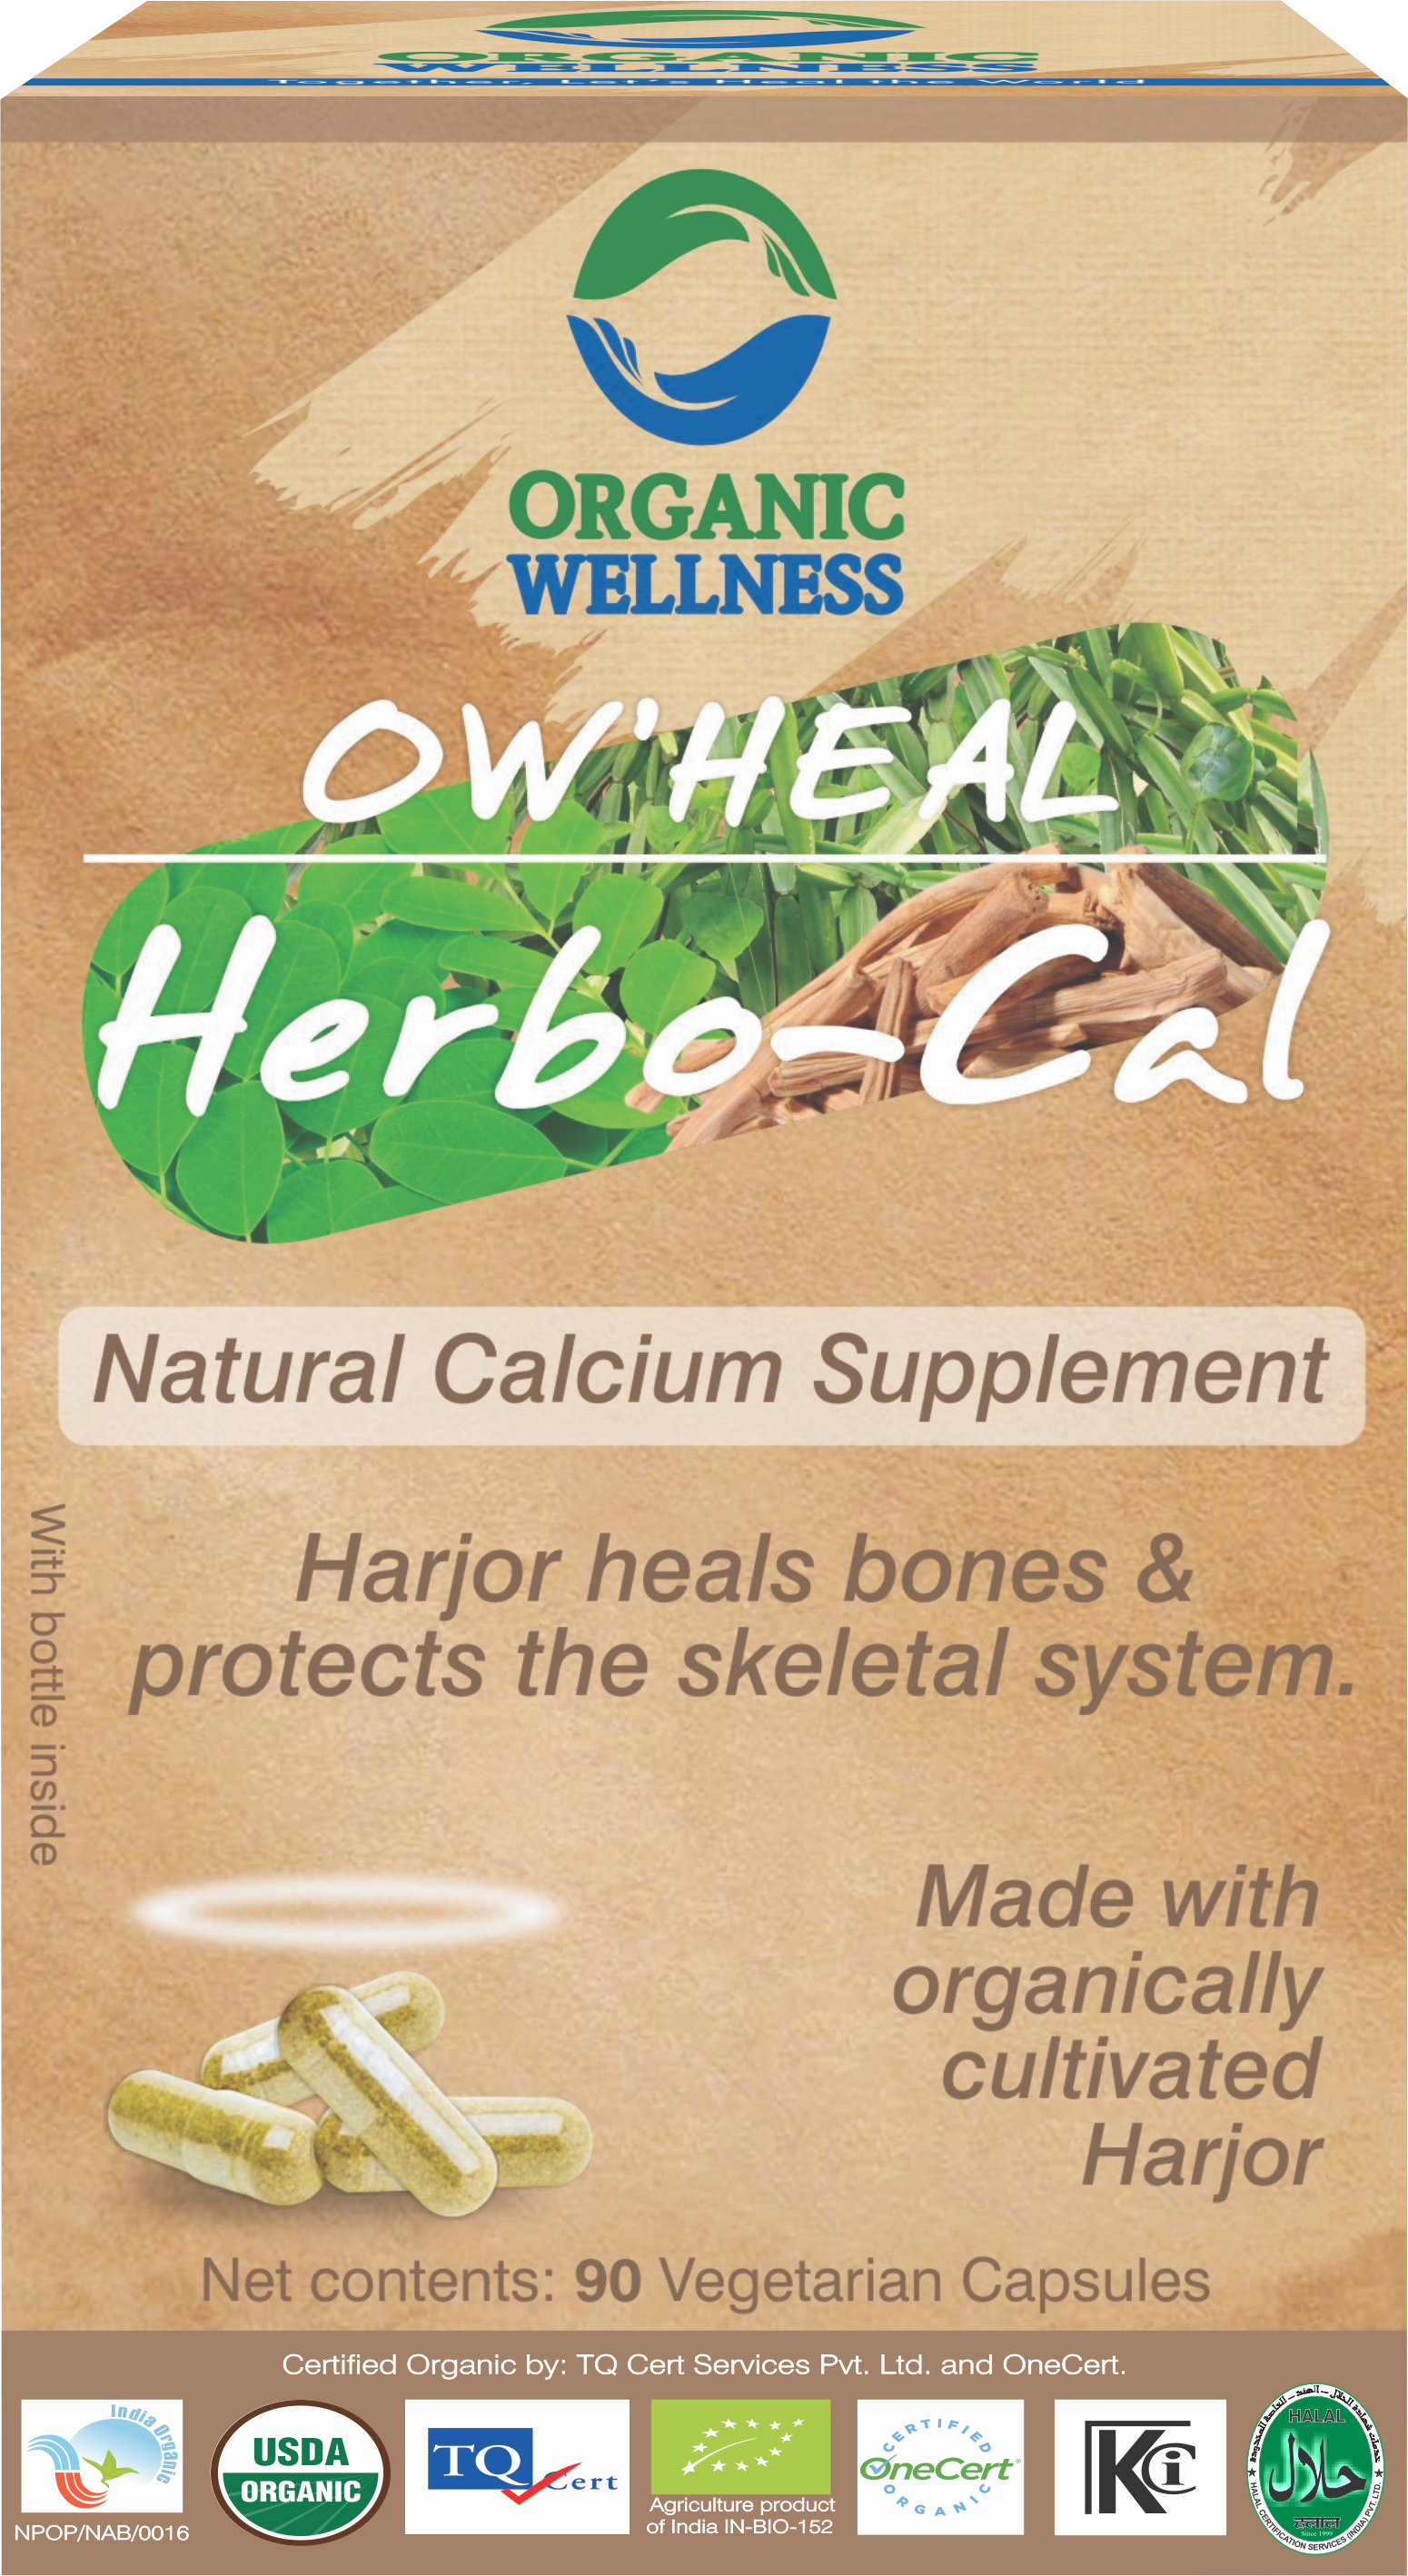 Buy Organic Wellness Heal Herbo Cal Capsule at Best Price Online